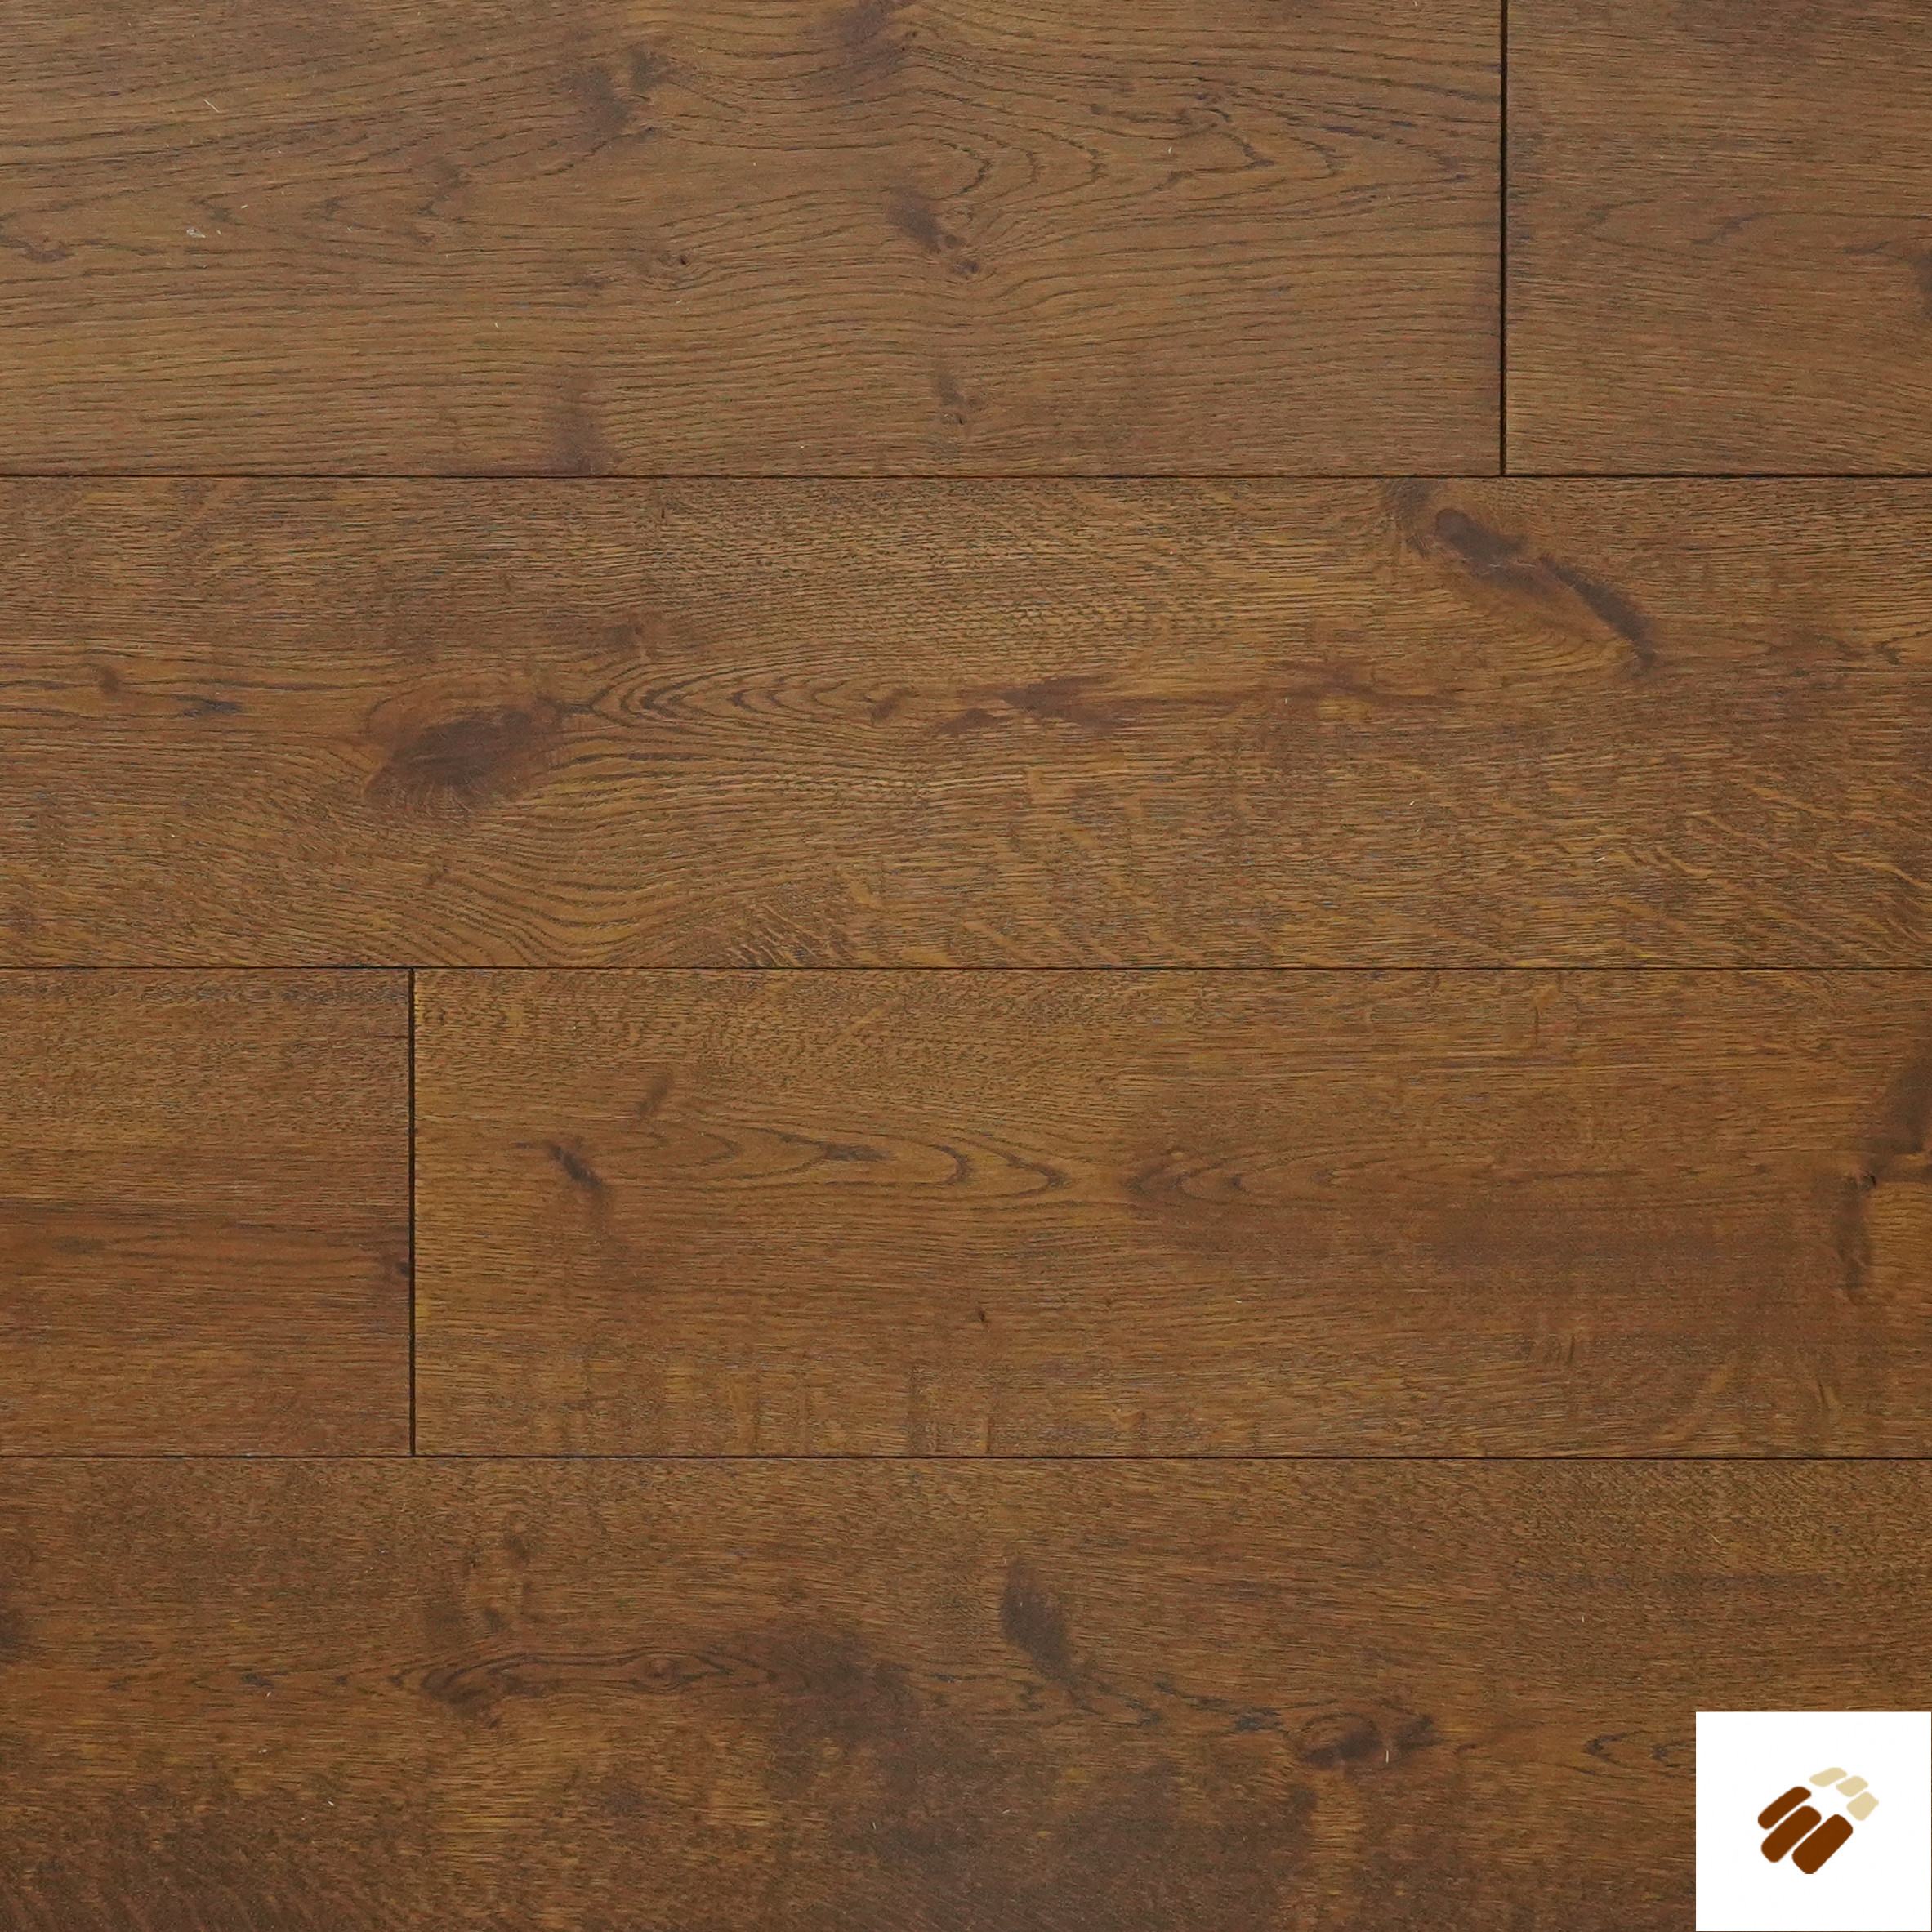 Furlong Flooring: Mont Blanc (8580) – Old English Brushed & UV Oiled (20/5 x 220mm)